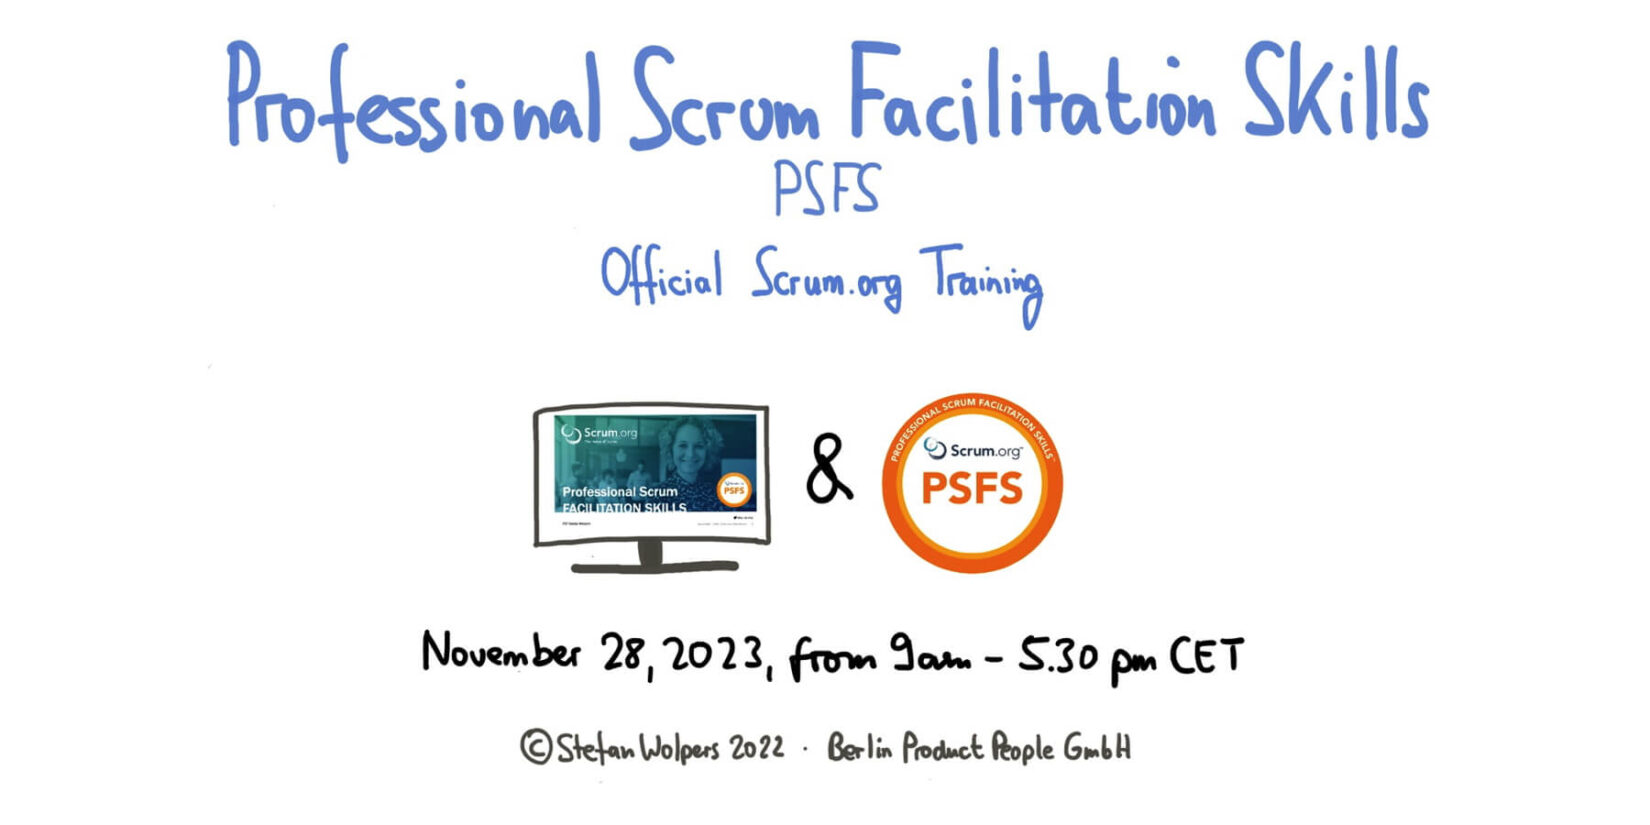 Professional Scrum Facilitation Skills Class w/ PSFS Certificate — November 28, 2023 — PST Stefan Wolpers